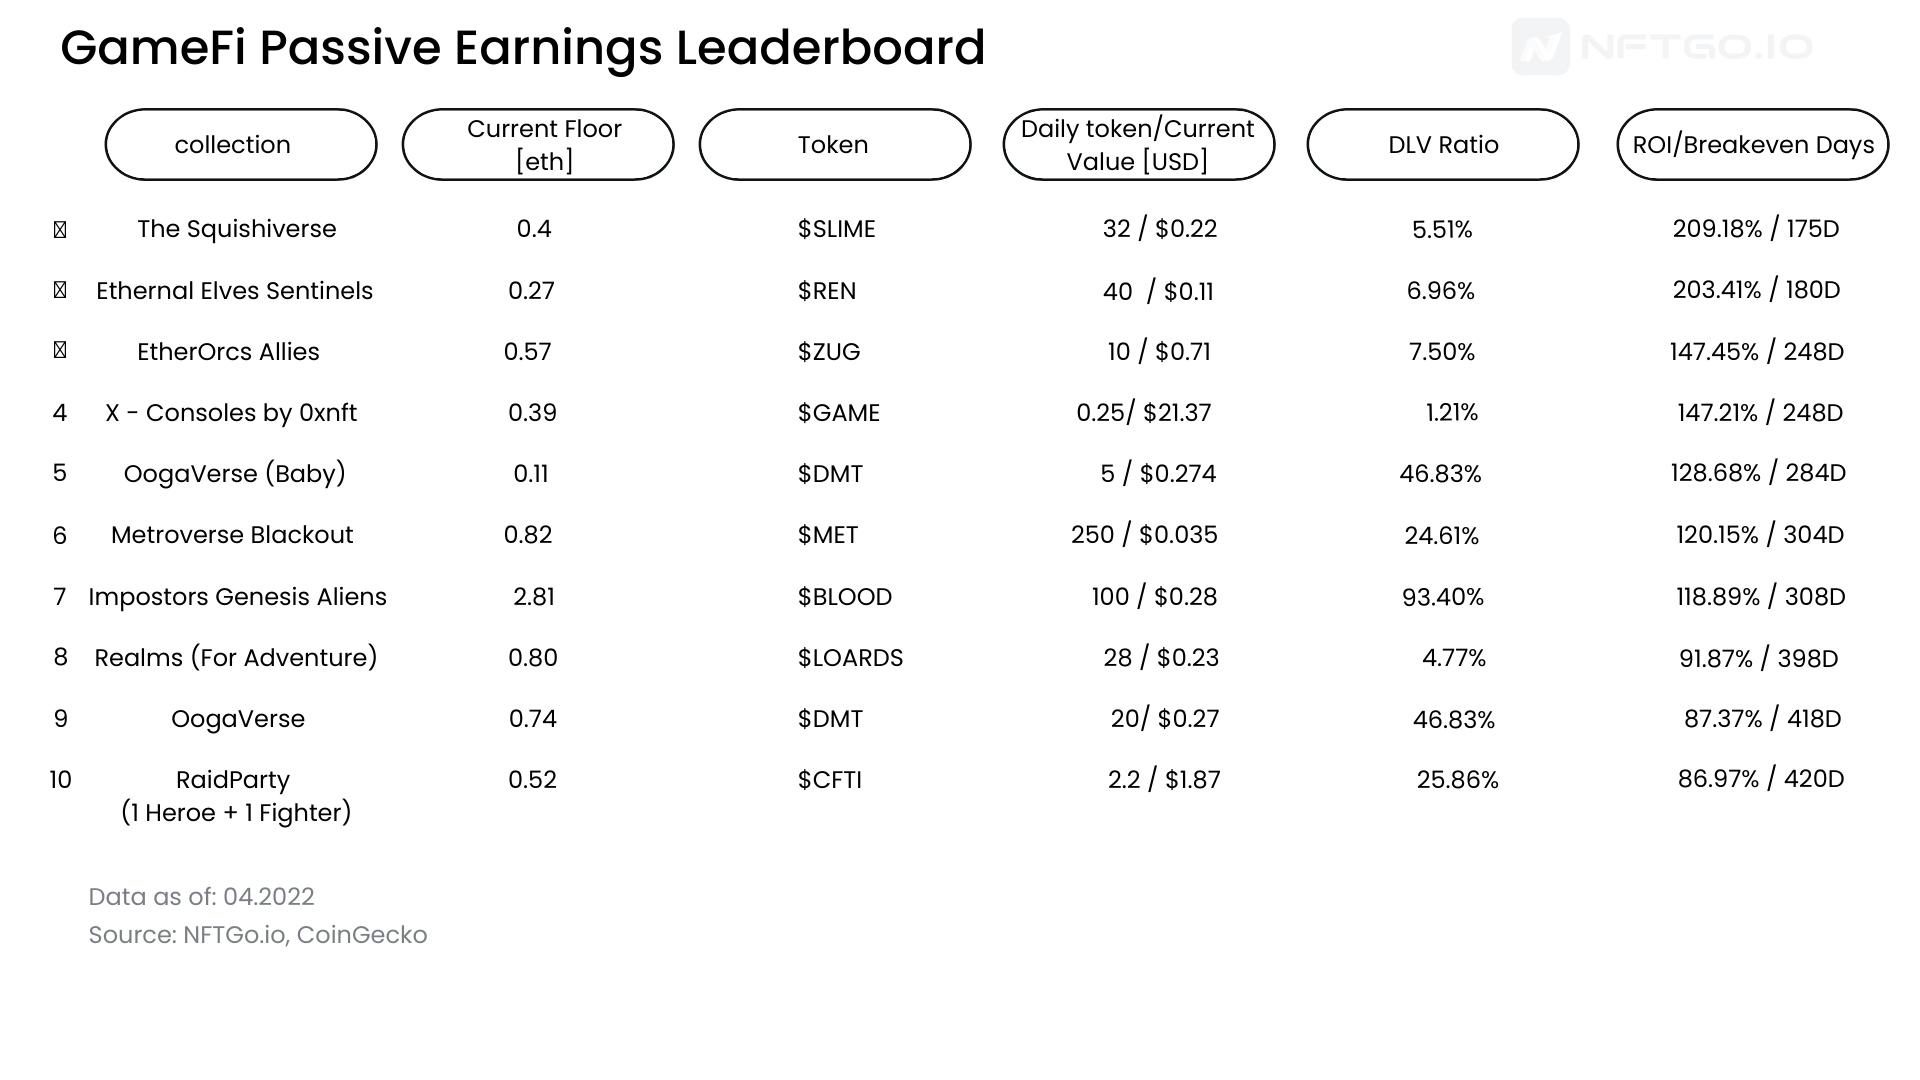 GameFi passive earnings leaderboard. (Source: NFTGo.io)